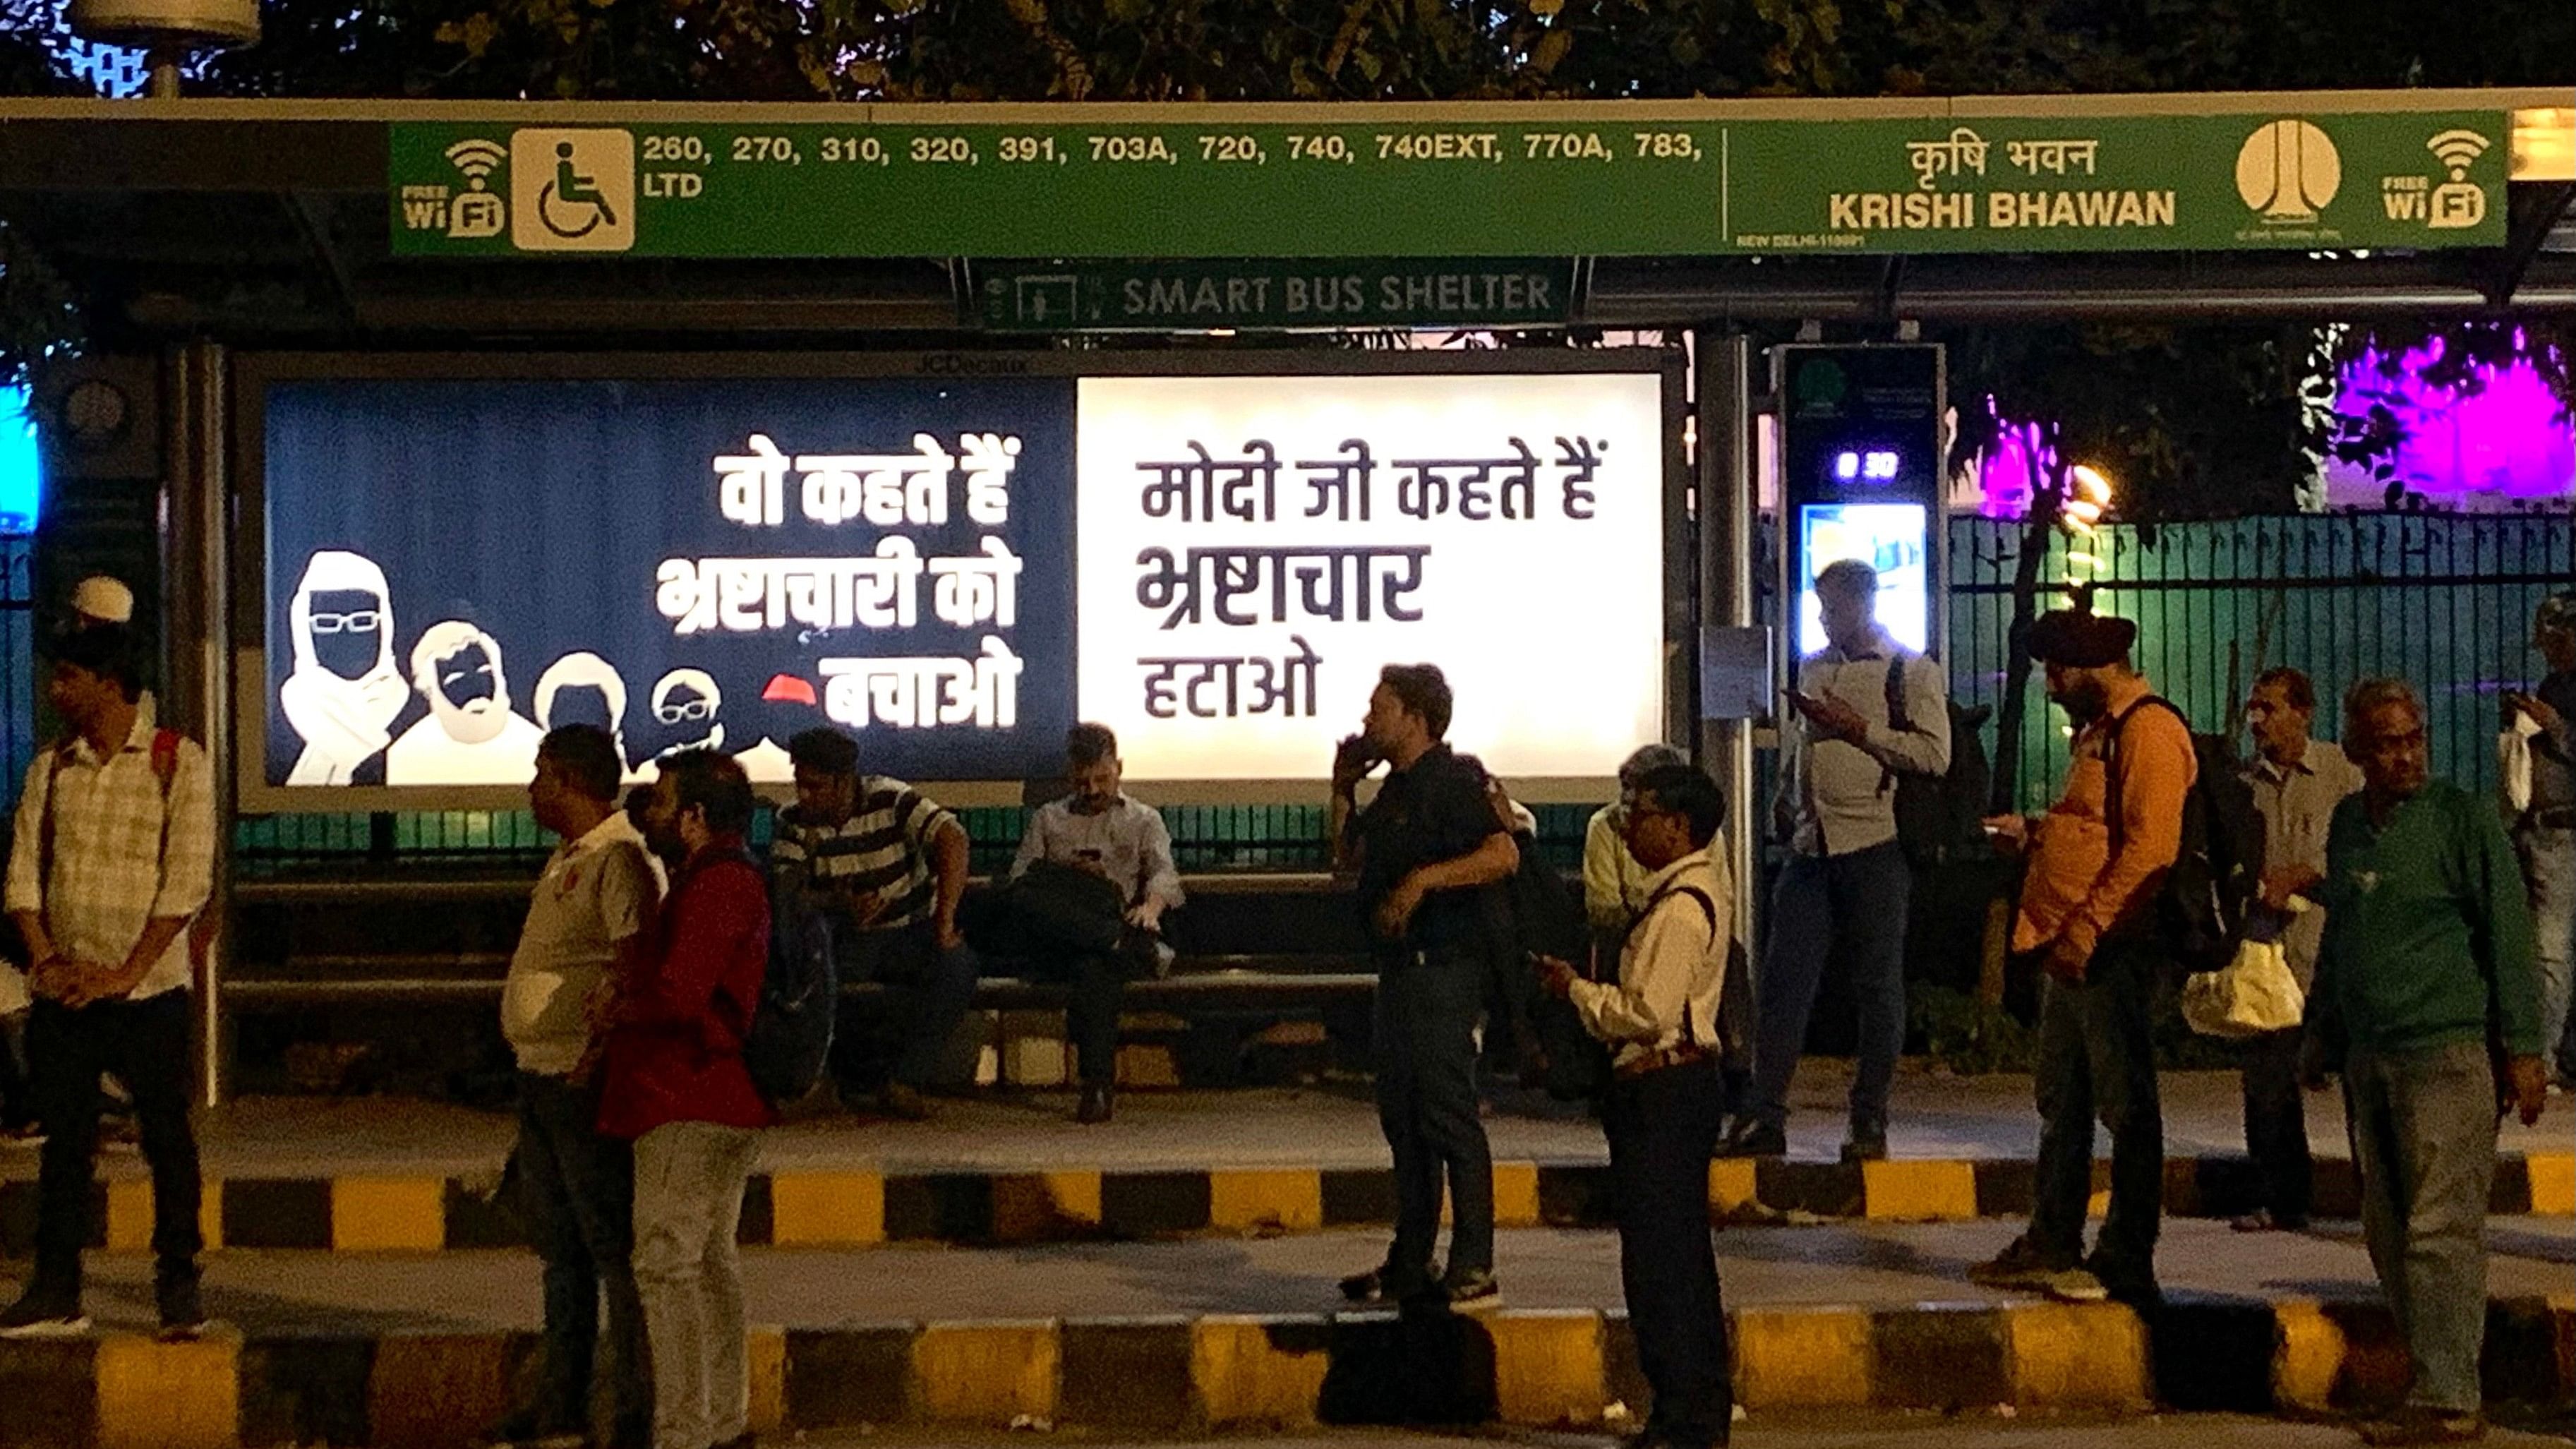 A BJP campaign on corruption at a Delhi Bus Stop